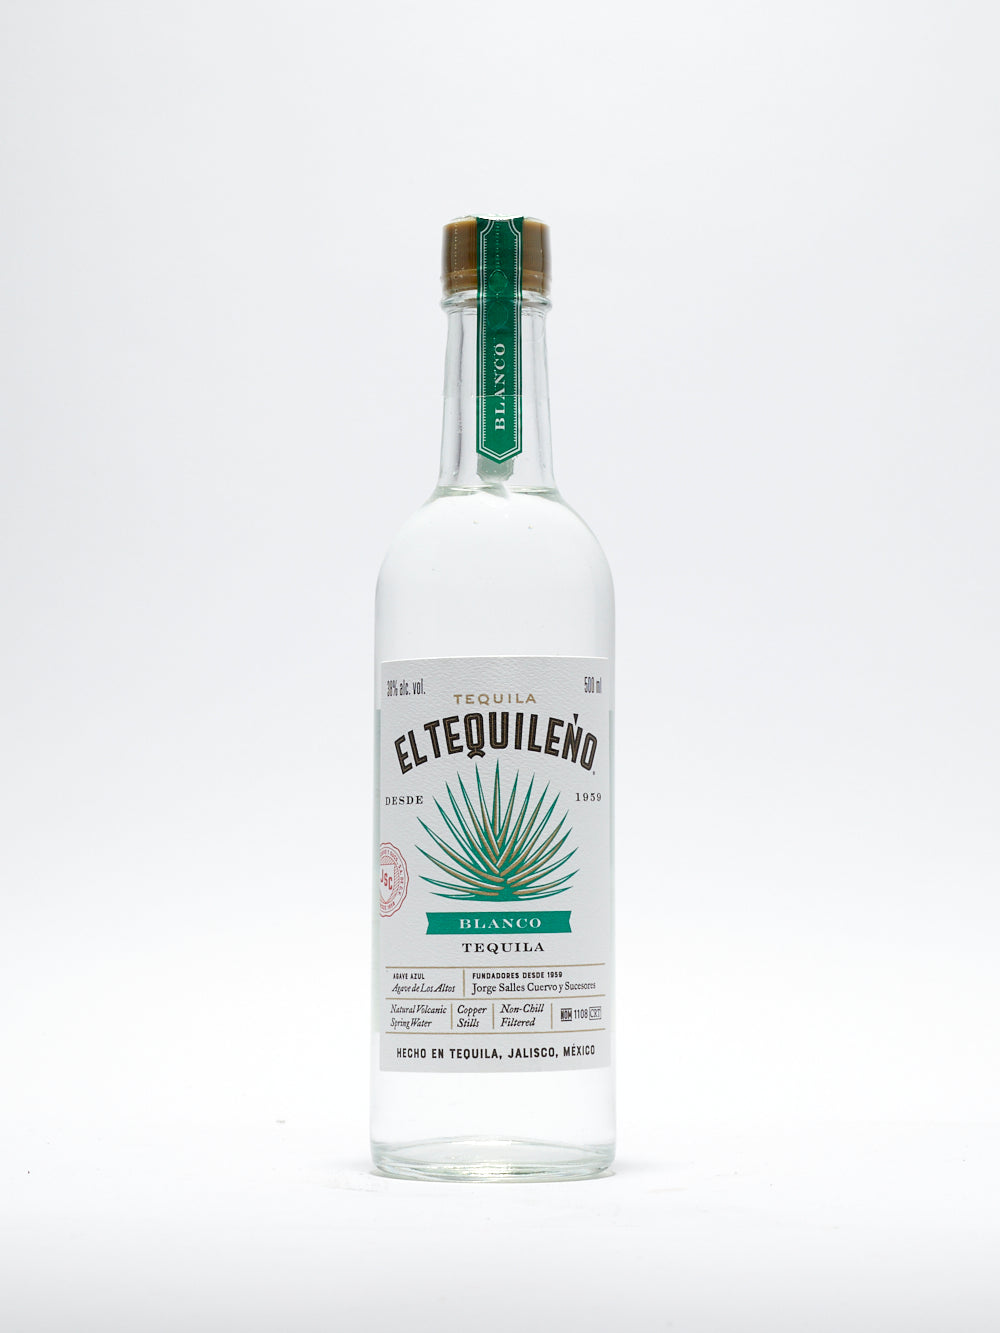 El Tequileńo, Tequila Blanco